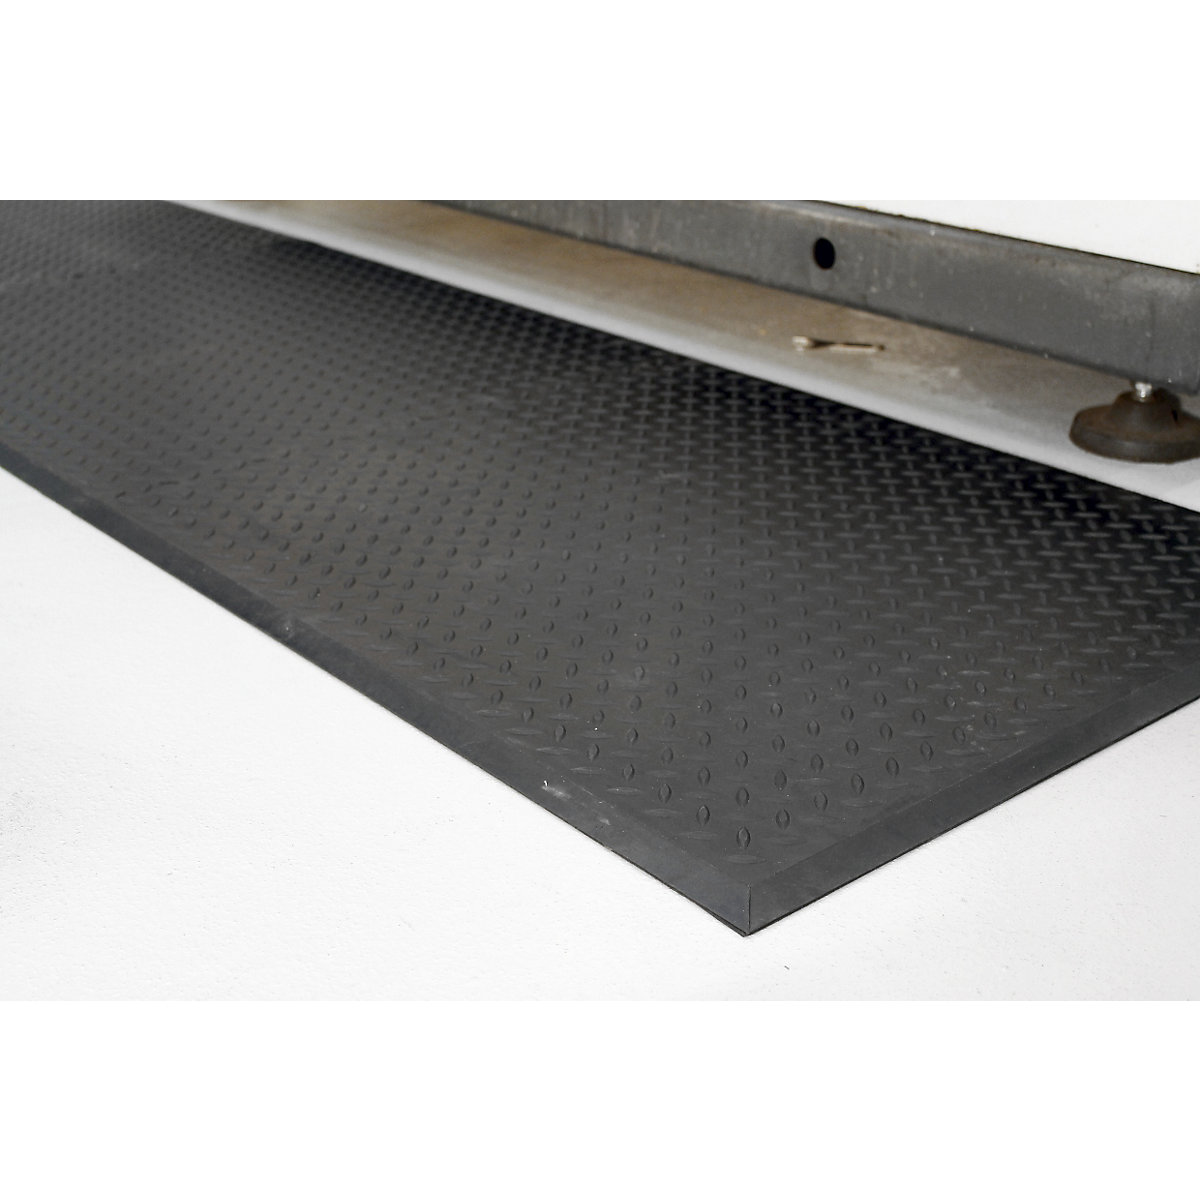 Comfort-Lok anti-fatigue matting – COBA, natural rubber, edge mat, LxW 800 x 700 mm, pack of 2-10